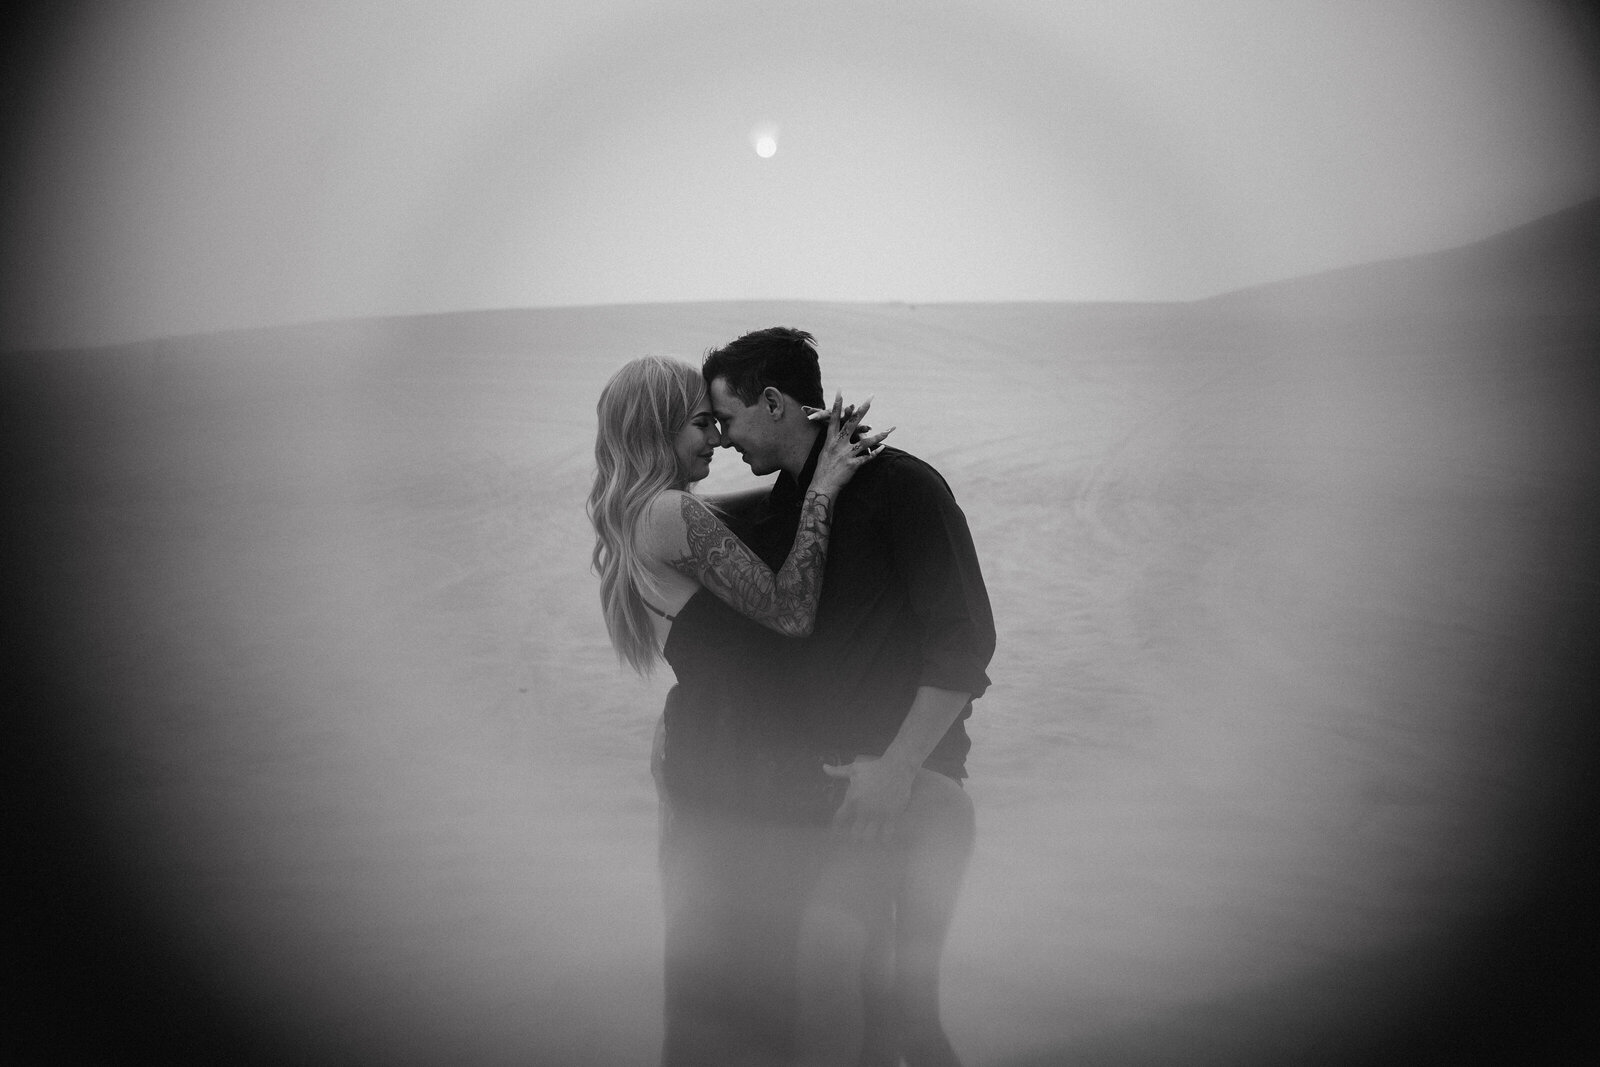 Sand Dunes Couples Photos - Raquel King Photography27